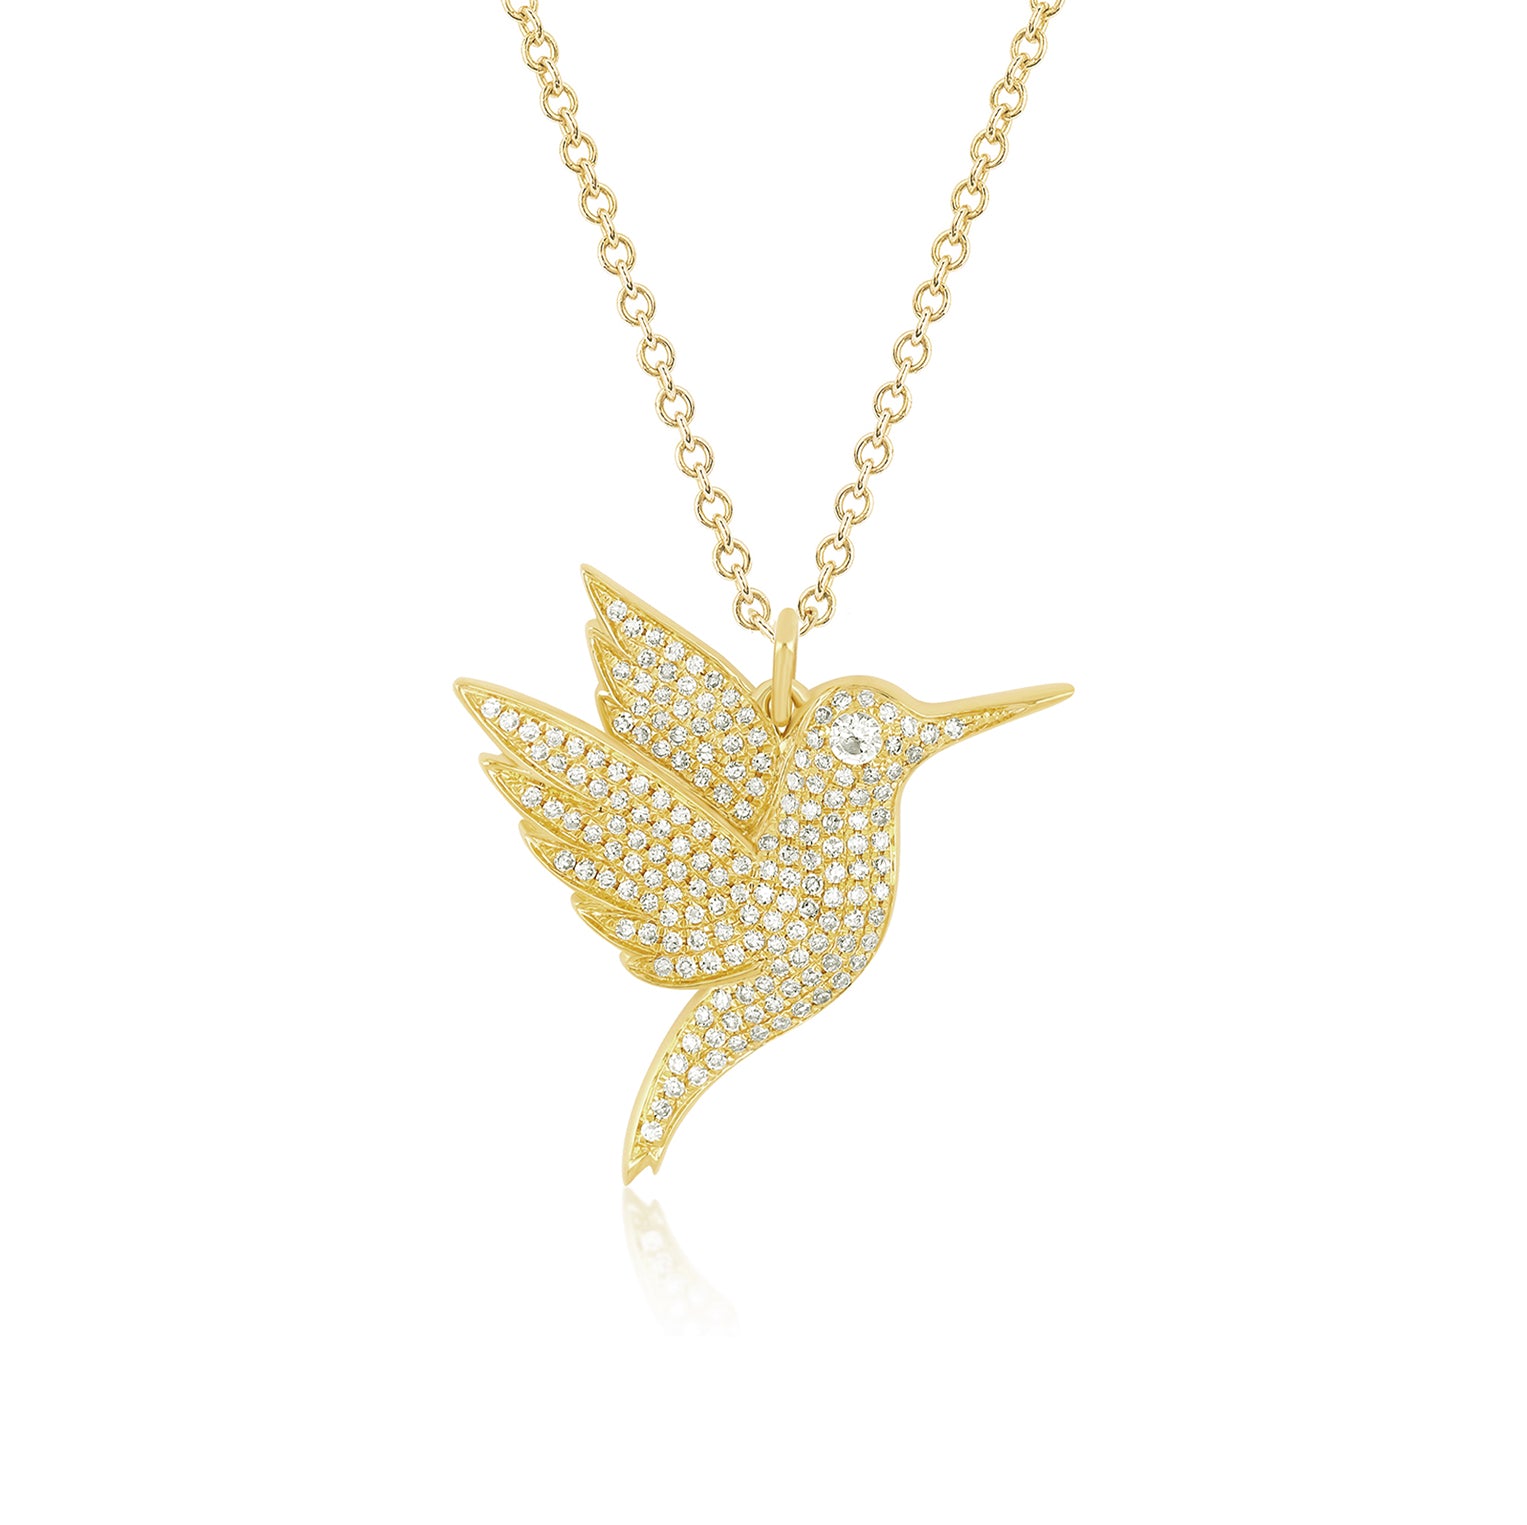 Pavé Diamond Hummingbird Necklace in 14k yellow gold with diamond birthstone eye